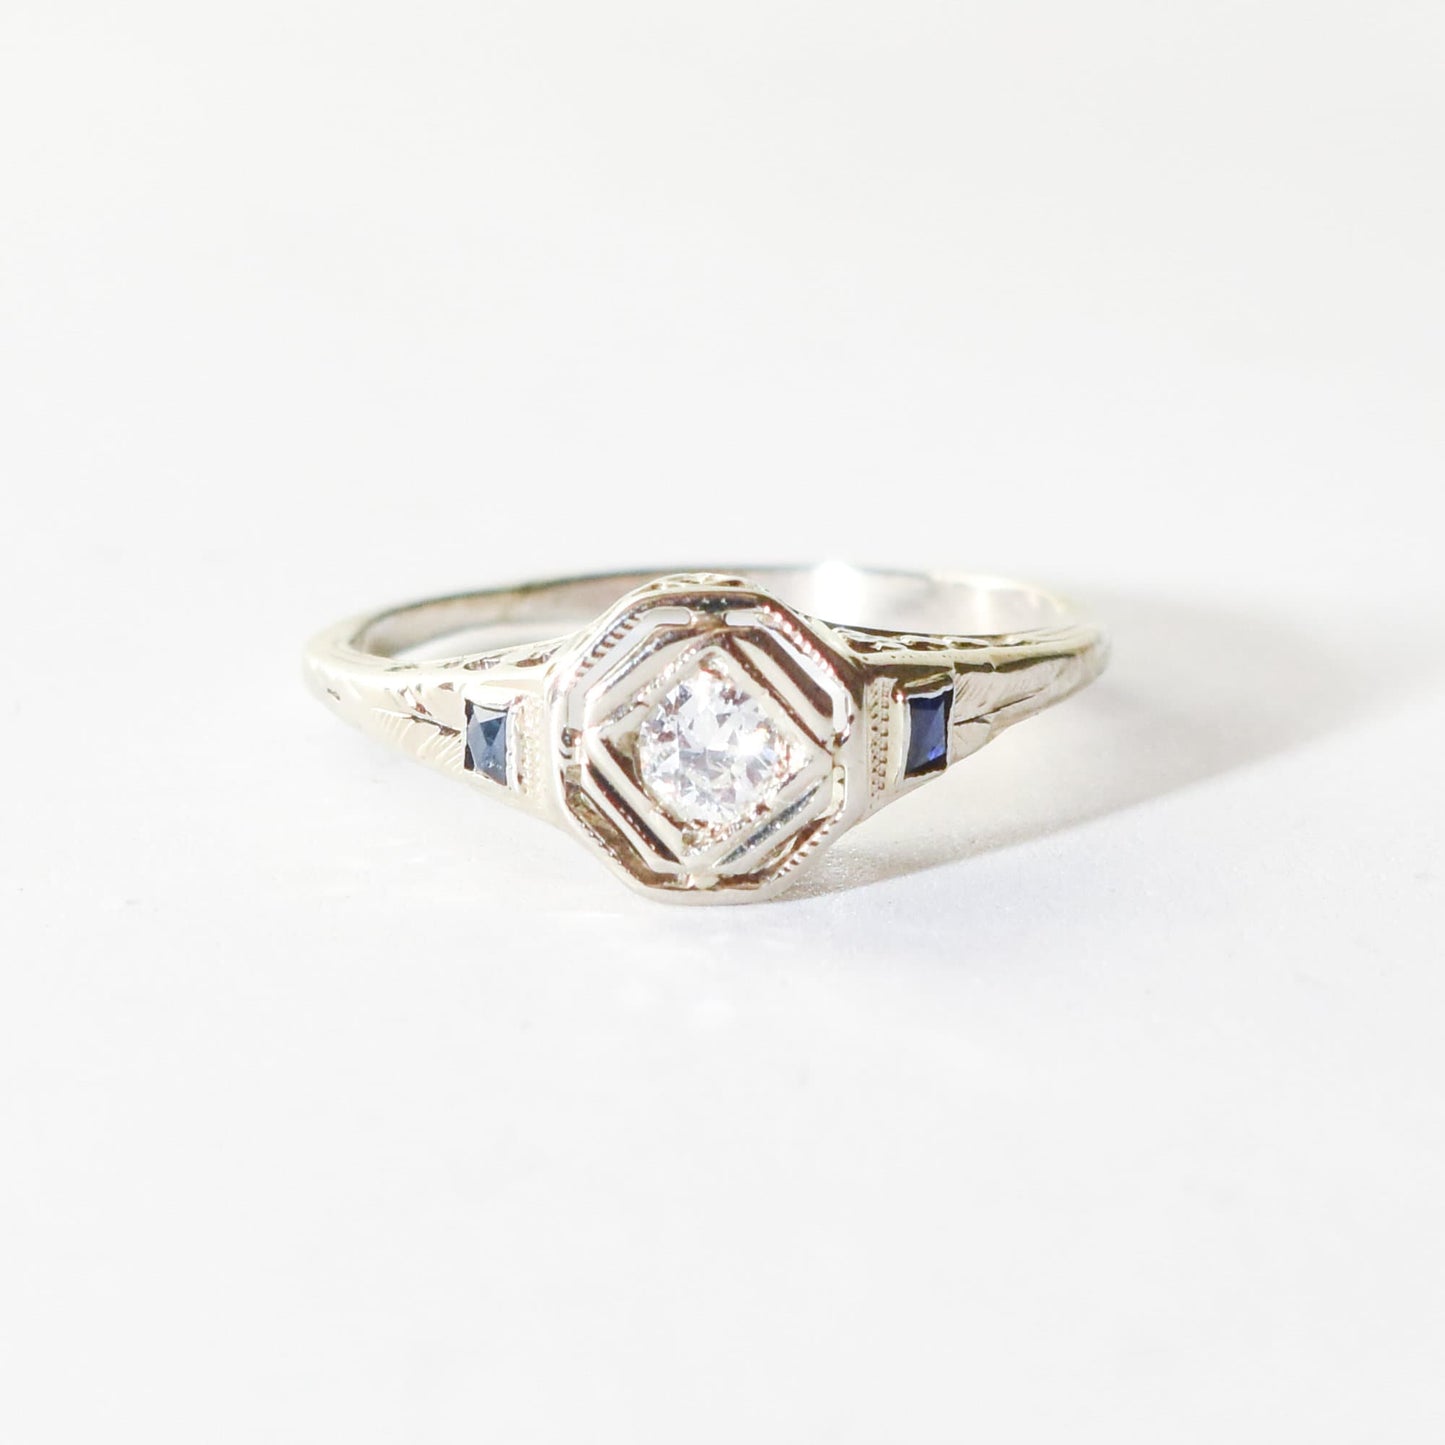 Antique 14K Diamond Sapphire Filigree Engagement Ring, Old-Mine Cut, Floral Motifs, Estate Jewelry, 5 3/4 US